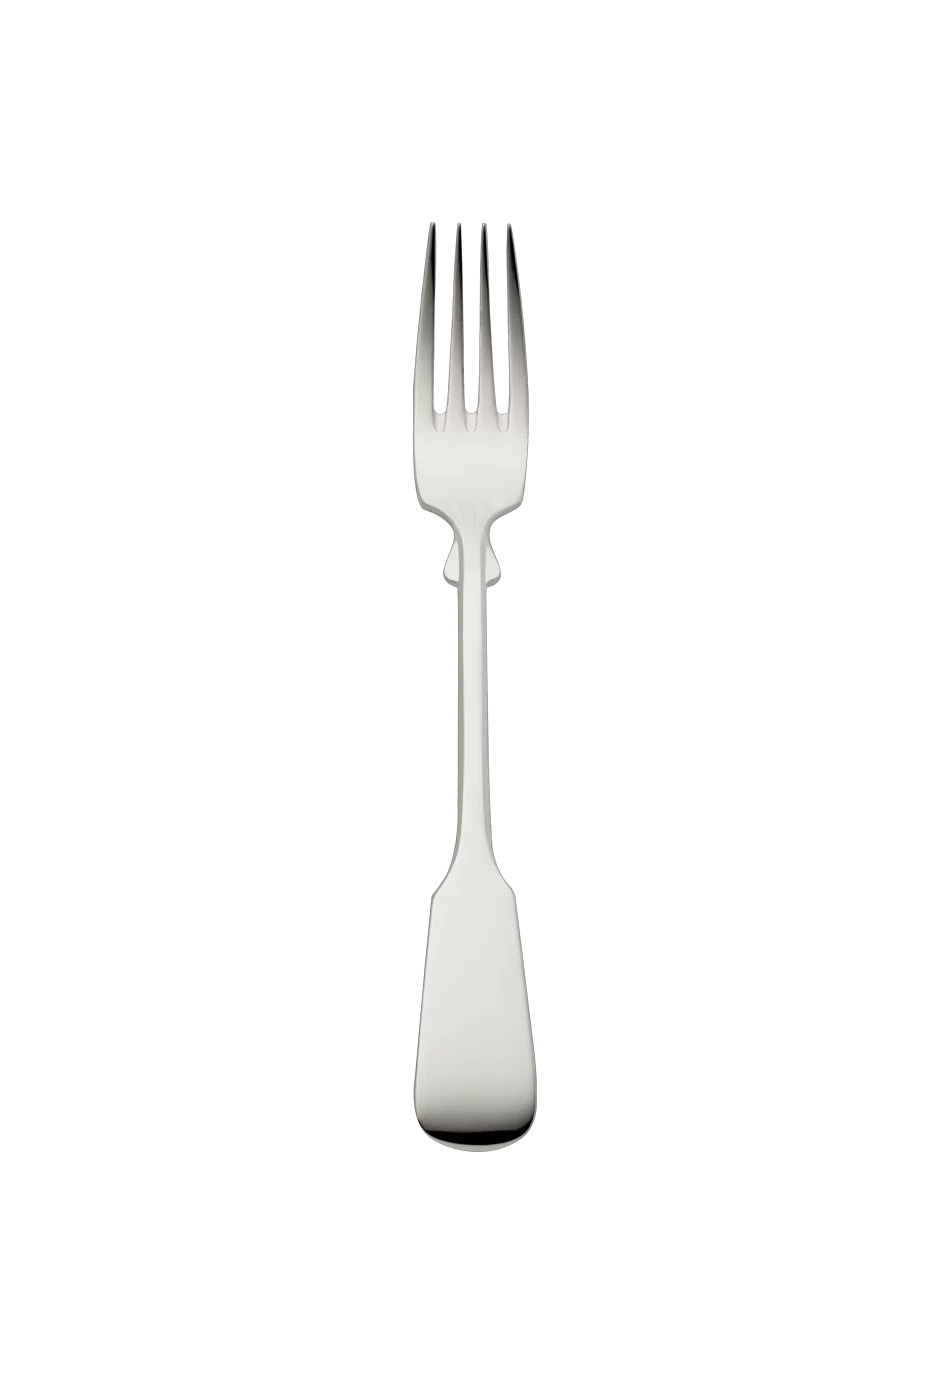 Spaten Menu Fork (150g massive silverplated)